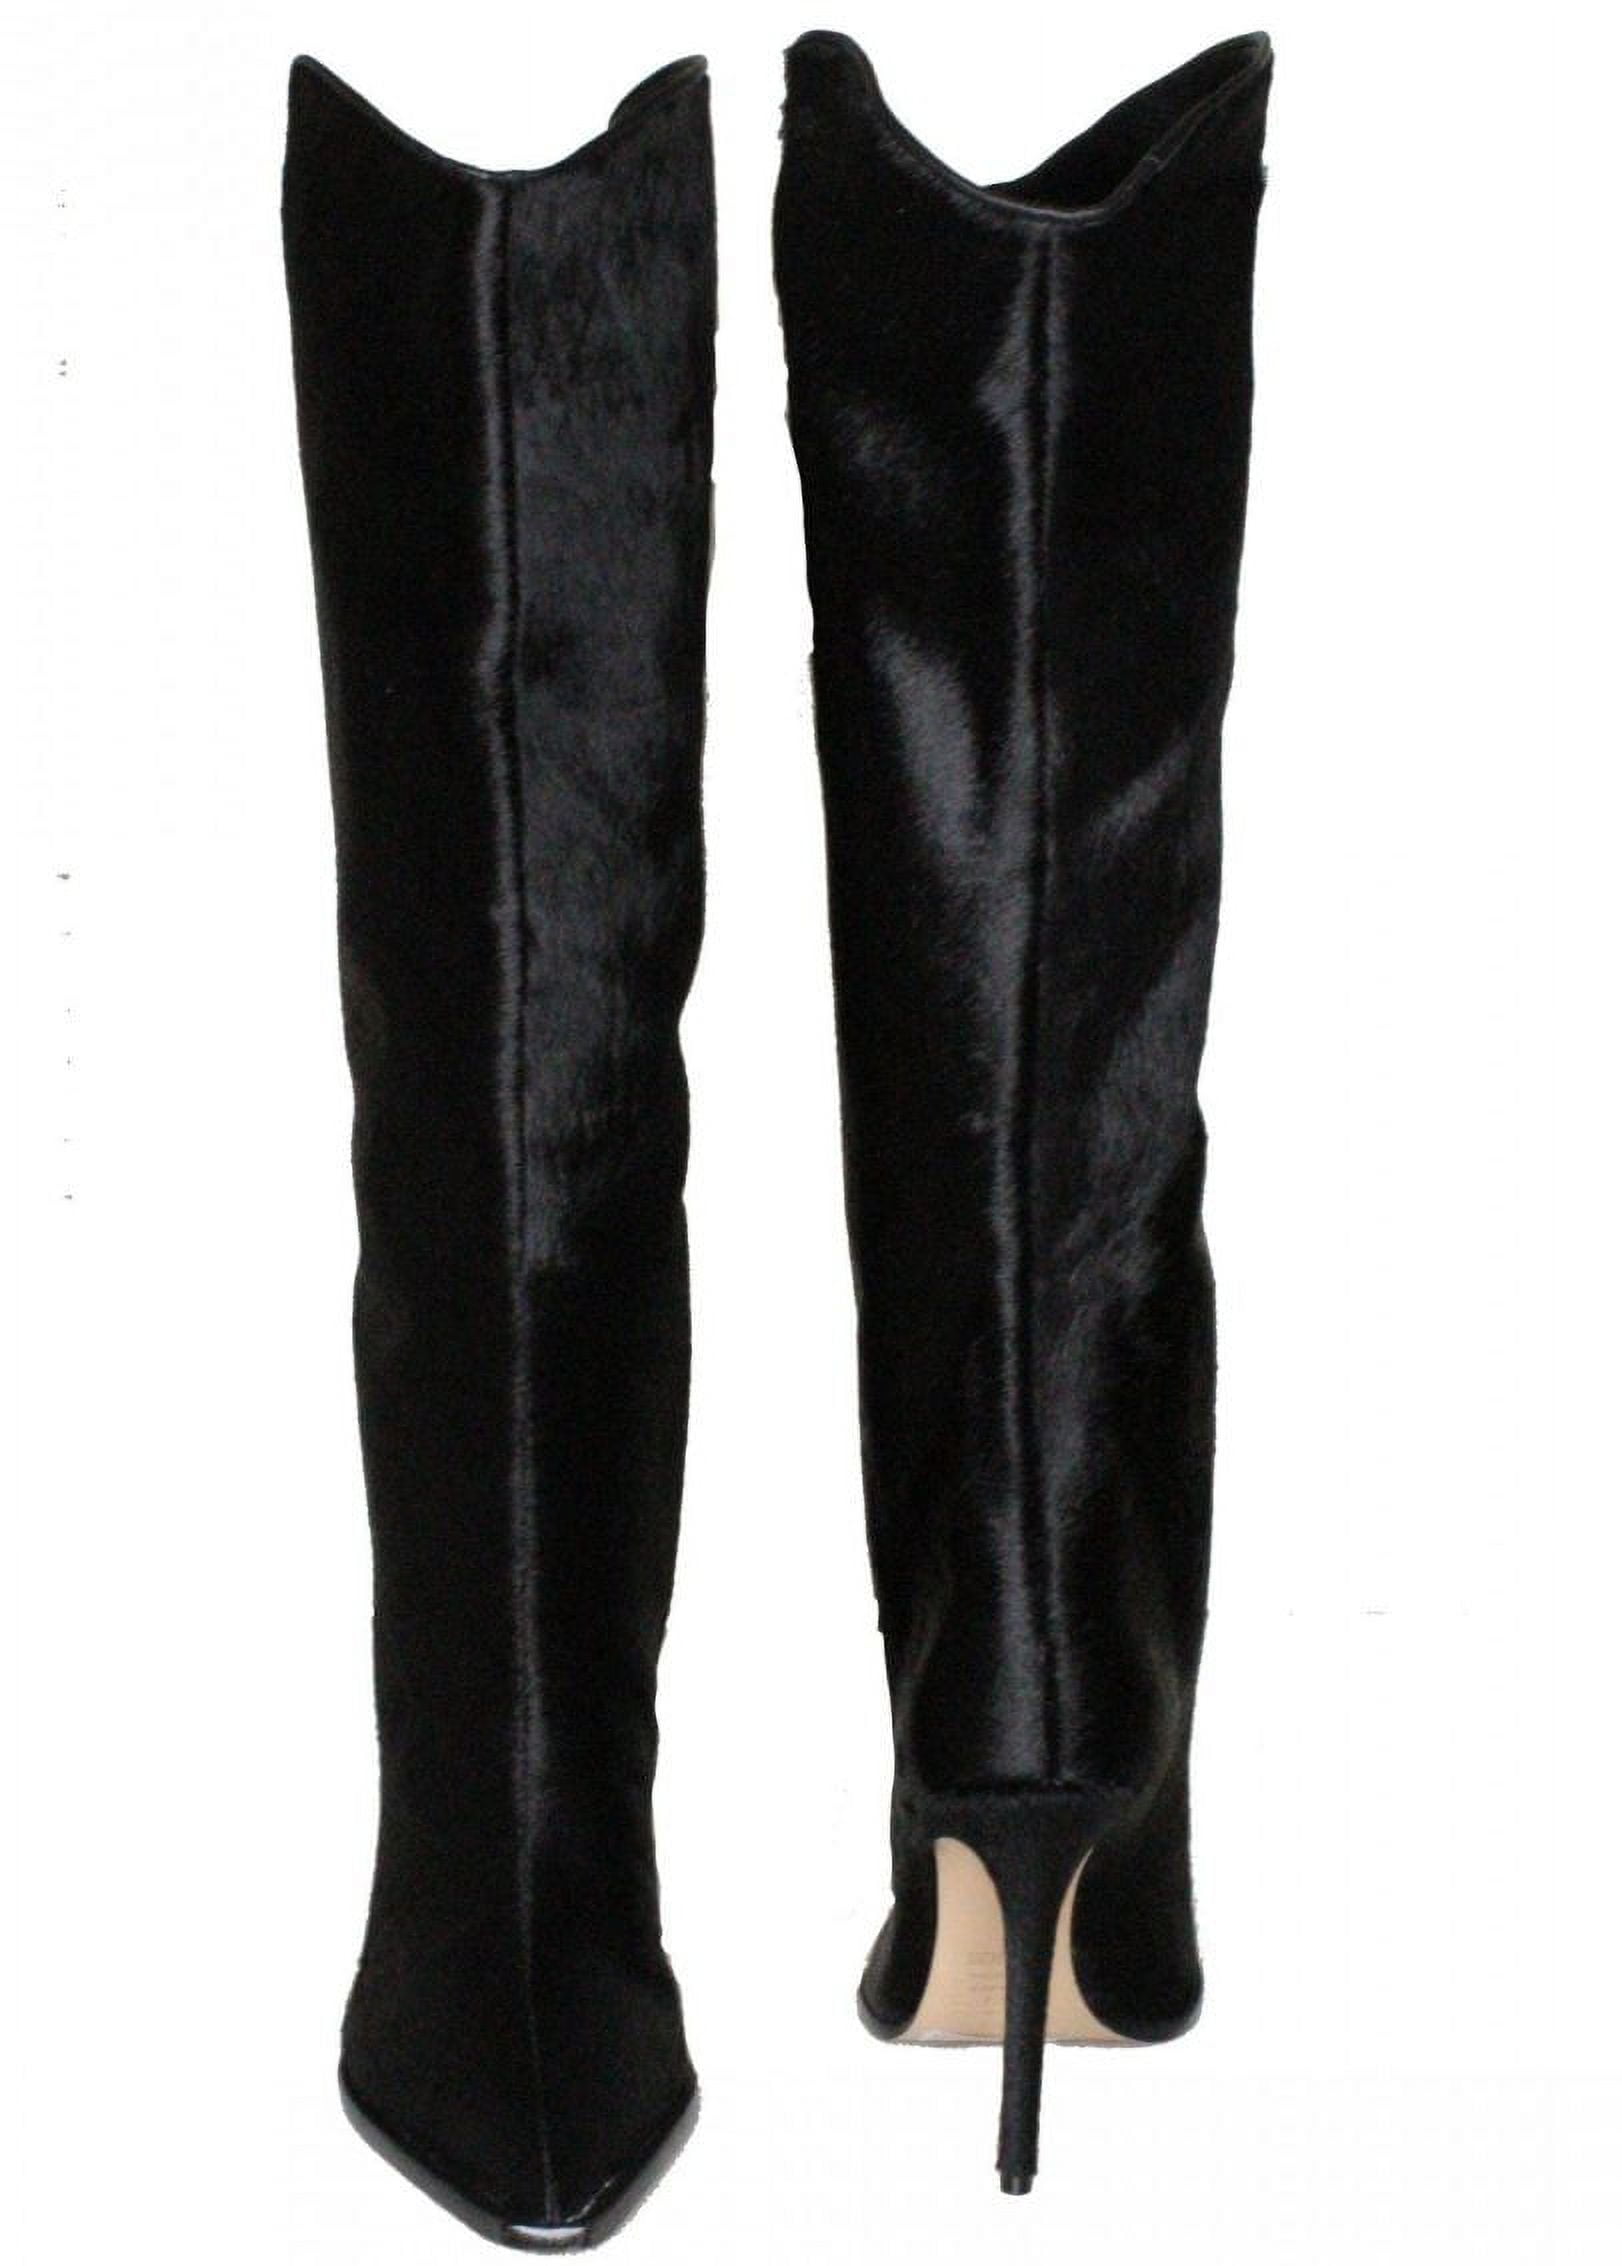 Schutz Maryana Women's Boots Black : 8.5 M